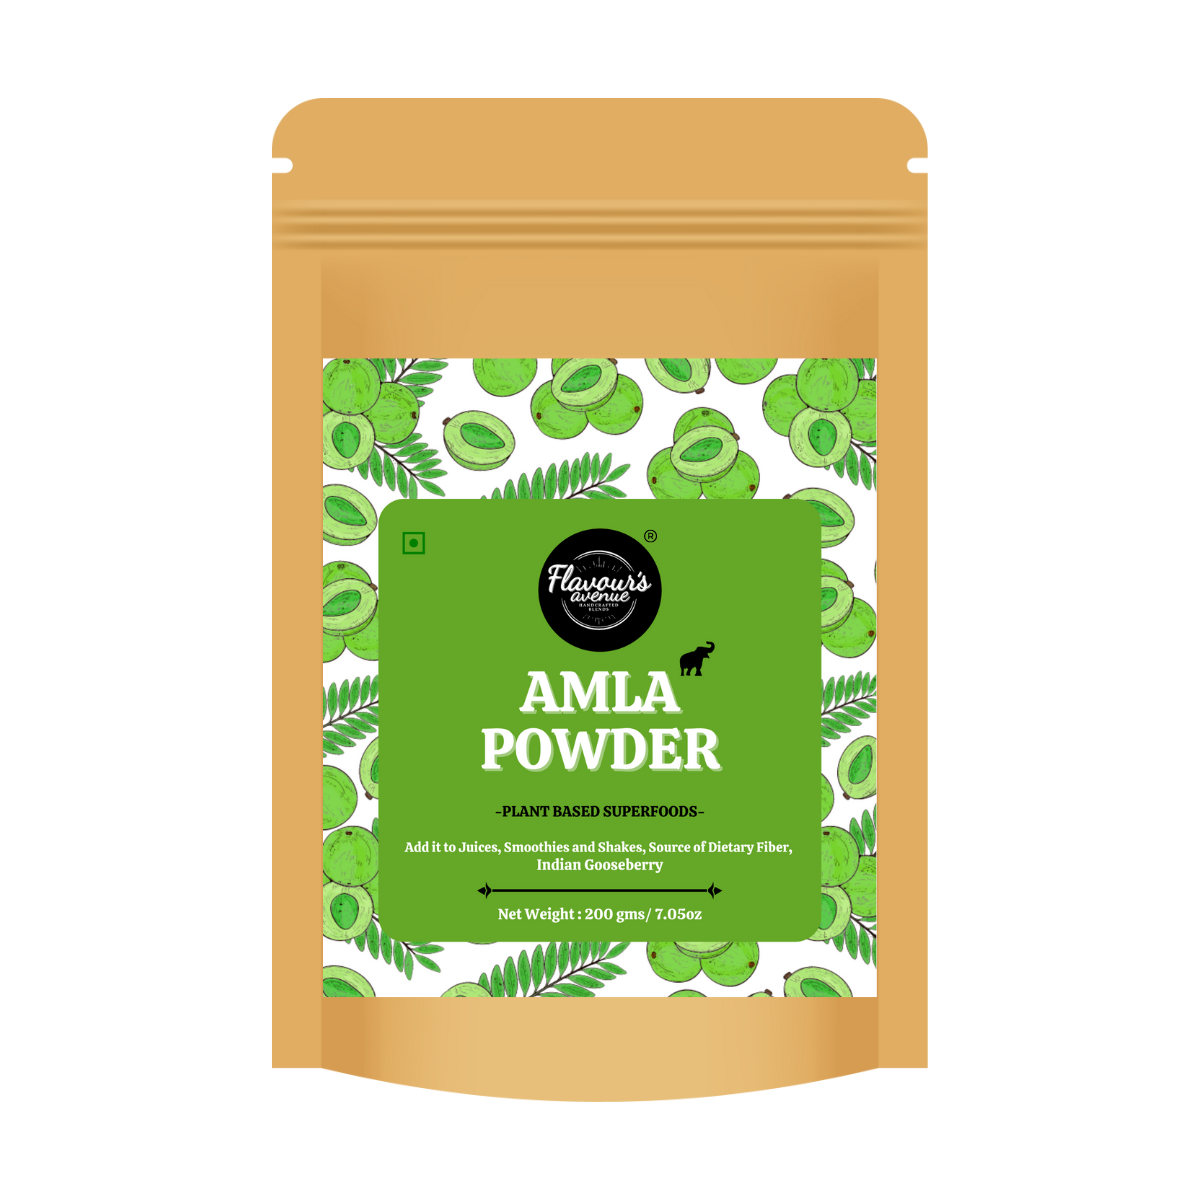 Flavours Avenue Amla Powder 200g